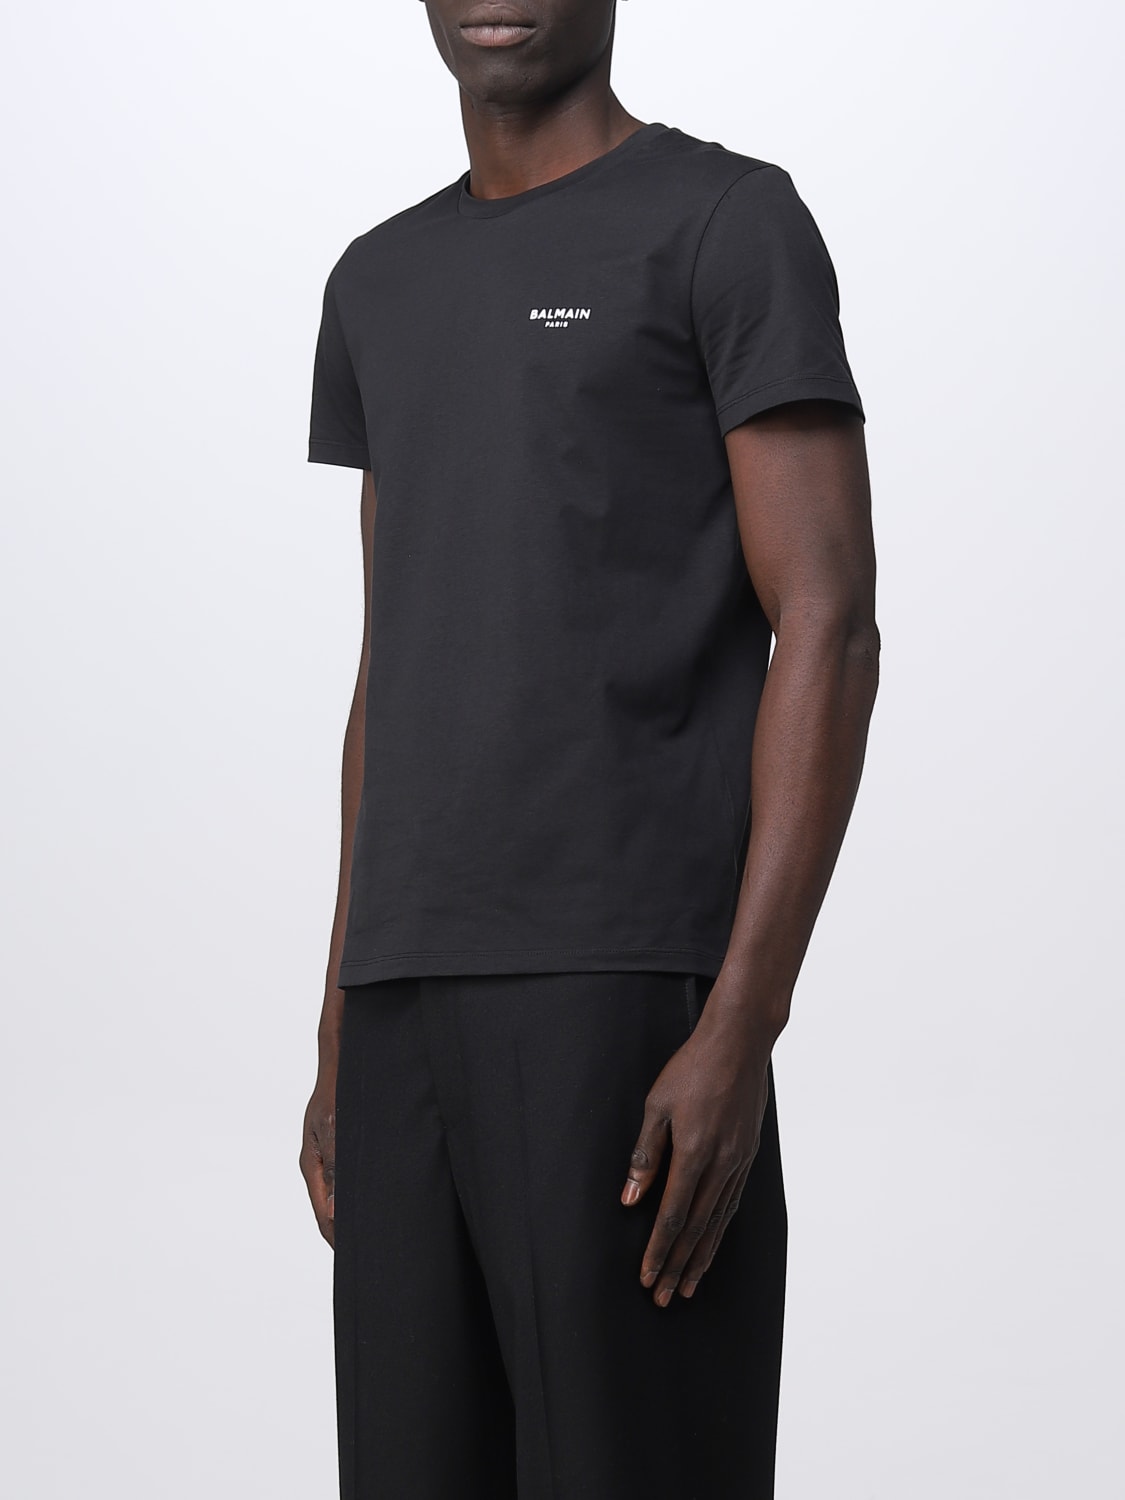 Cotton sweatpants with Balmain Paris logo black - Men